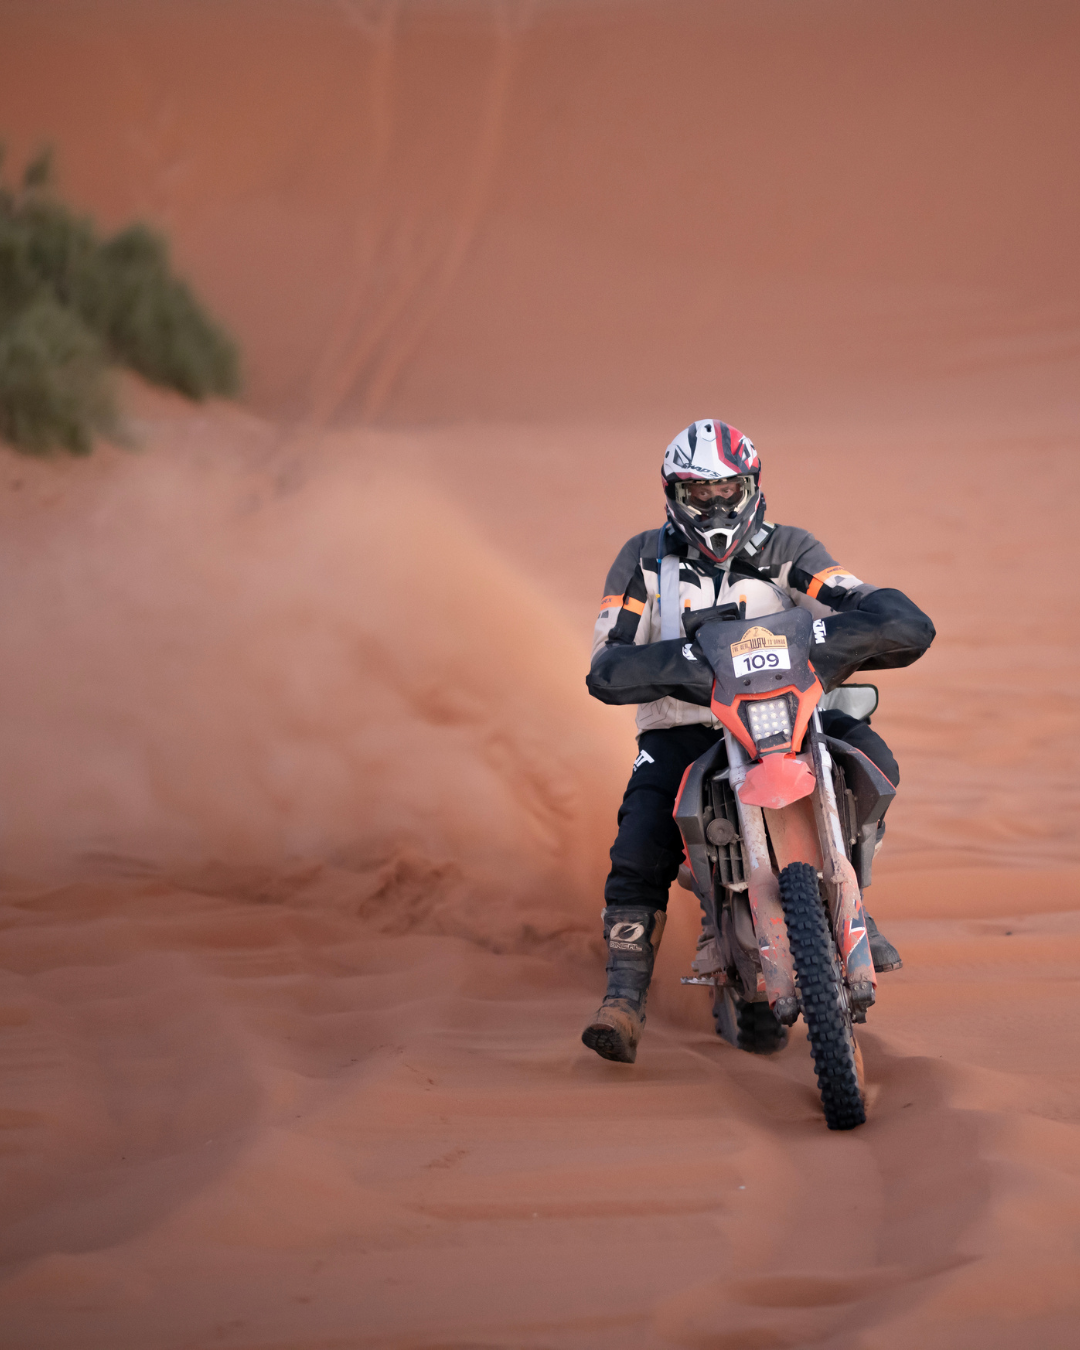 Dakar Adventure - meet the Dakar Rally on an offroad tour with an Enduro  Bike, 4x4, Buggy (side by side) or an Adventure Bike.